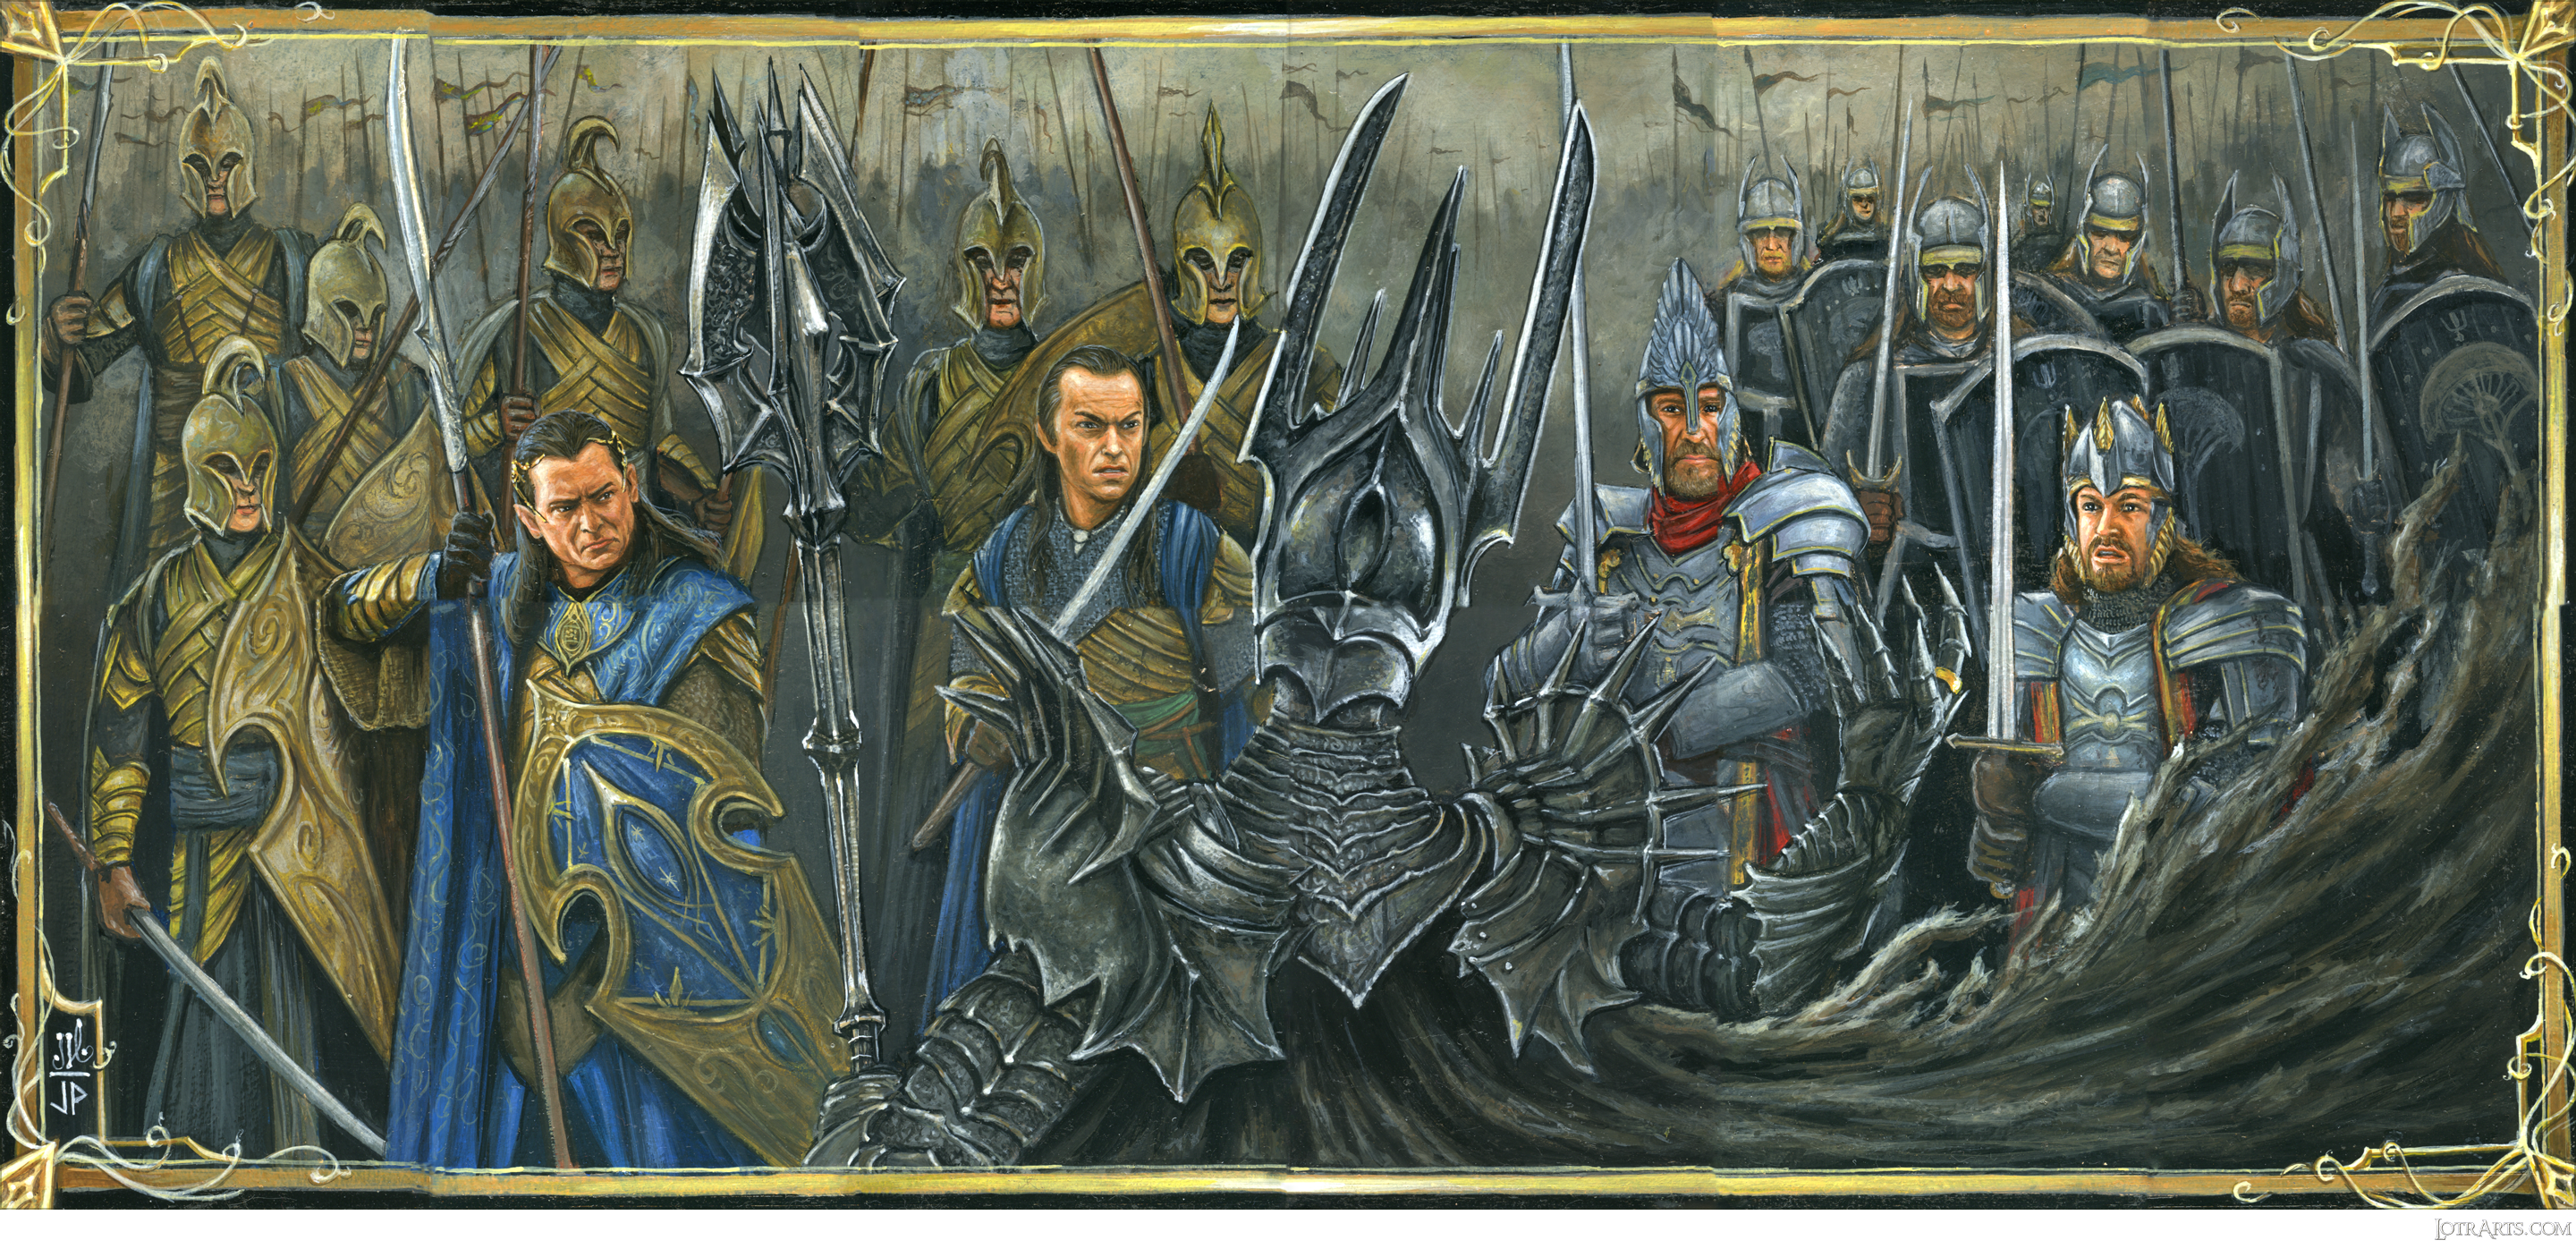 Twelve-card panel of the Last Alliance battling Sauron by Potratz and Hai<span class="ngViews">17 views</span>